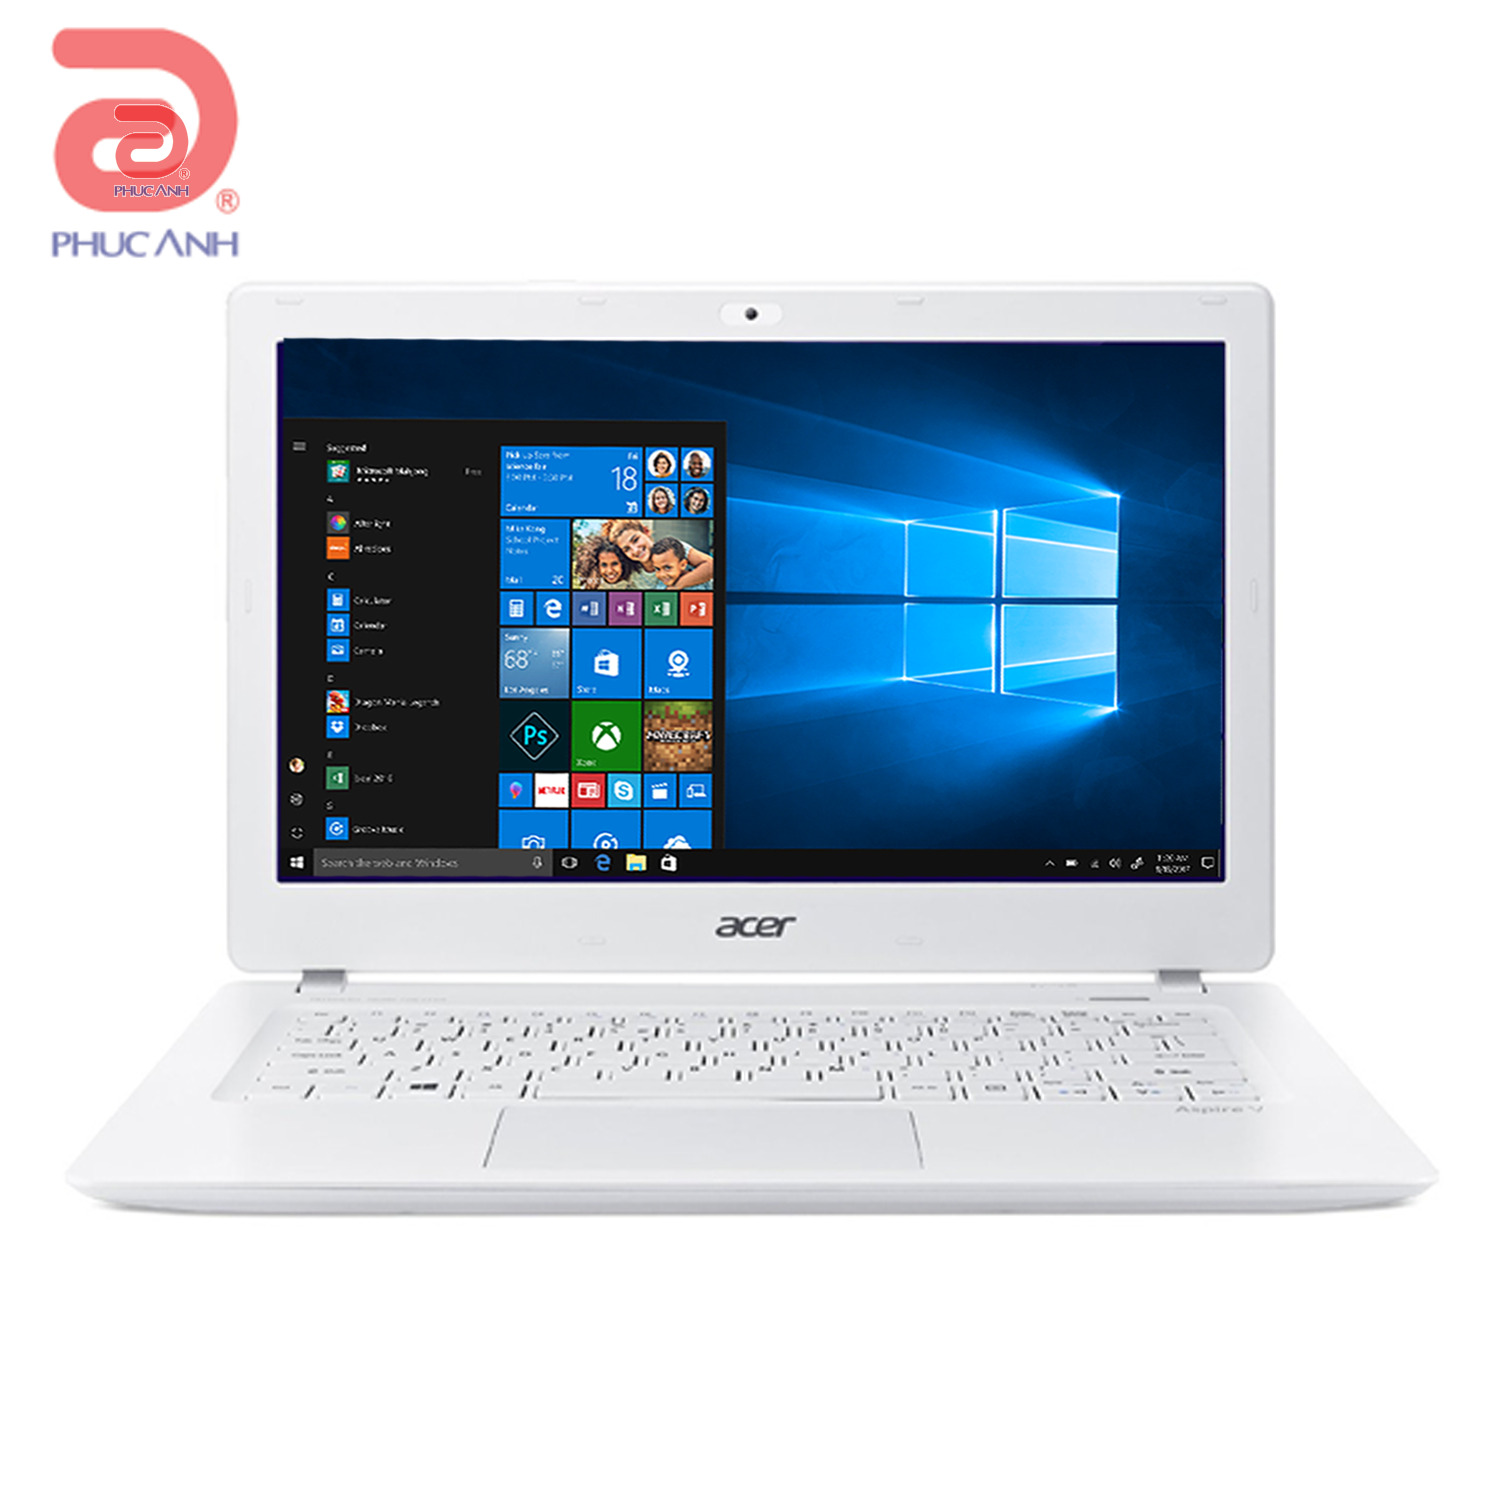 Laptop Acer V3-371-38M5 - Intel core i3 5005U, RAM 4GB, HDD 500GB, Intel HD Graphics, 13.3 inch